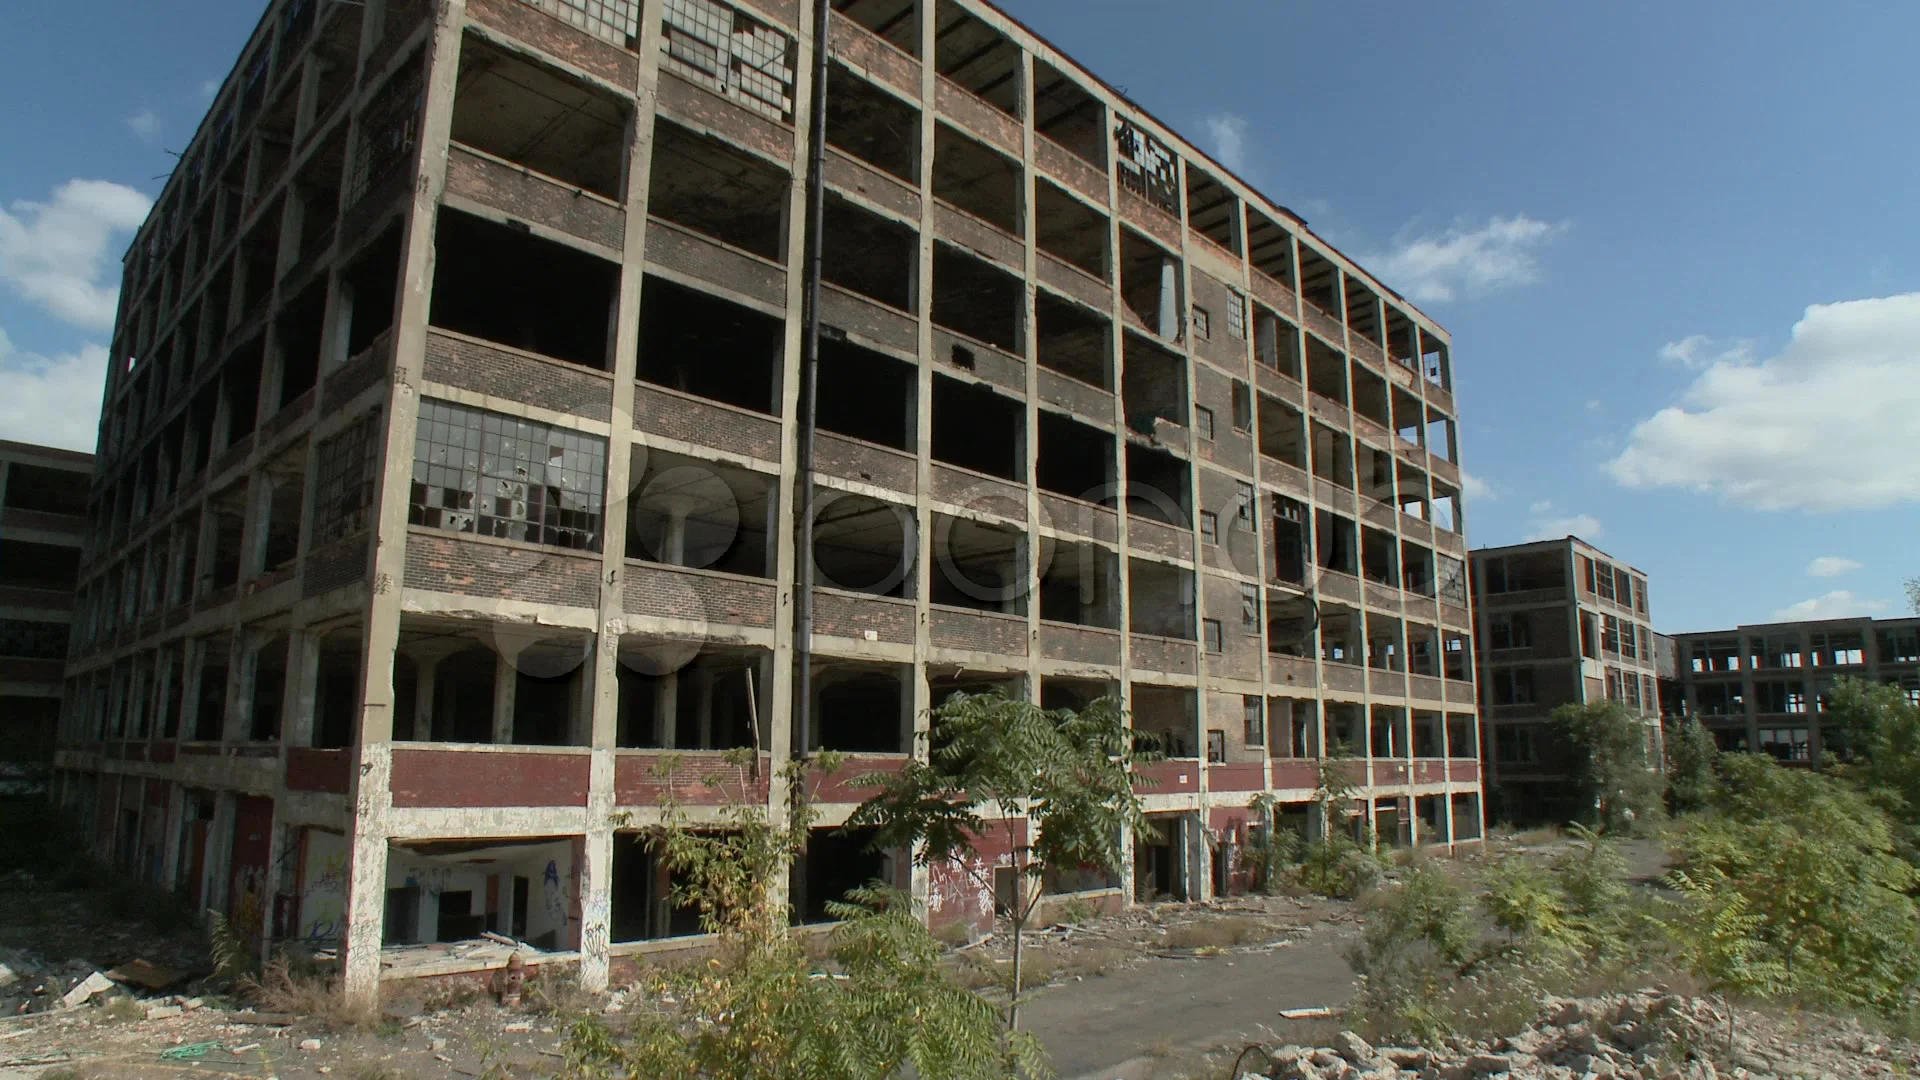 detroit abandoned factory